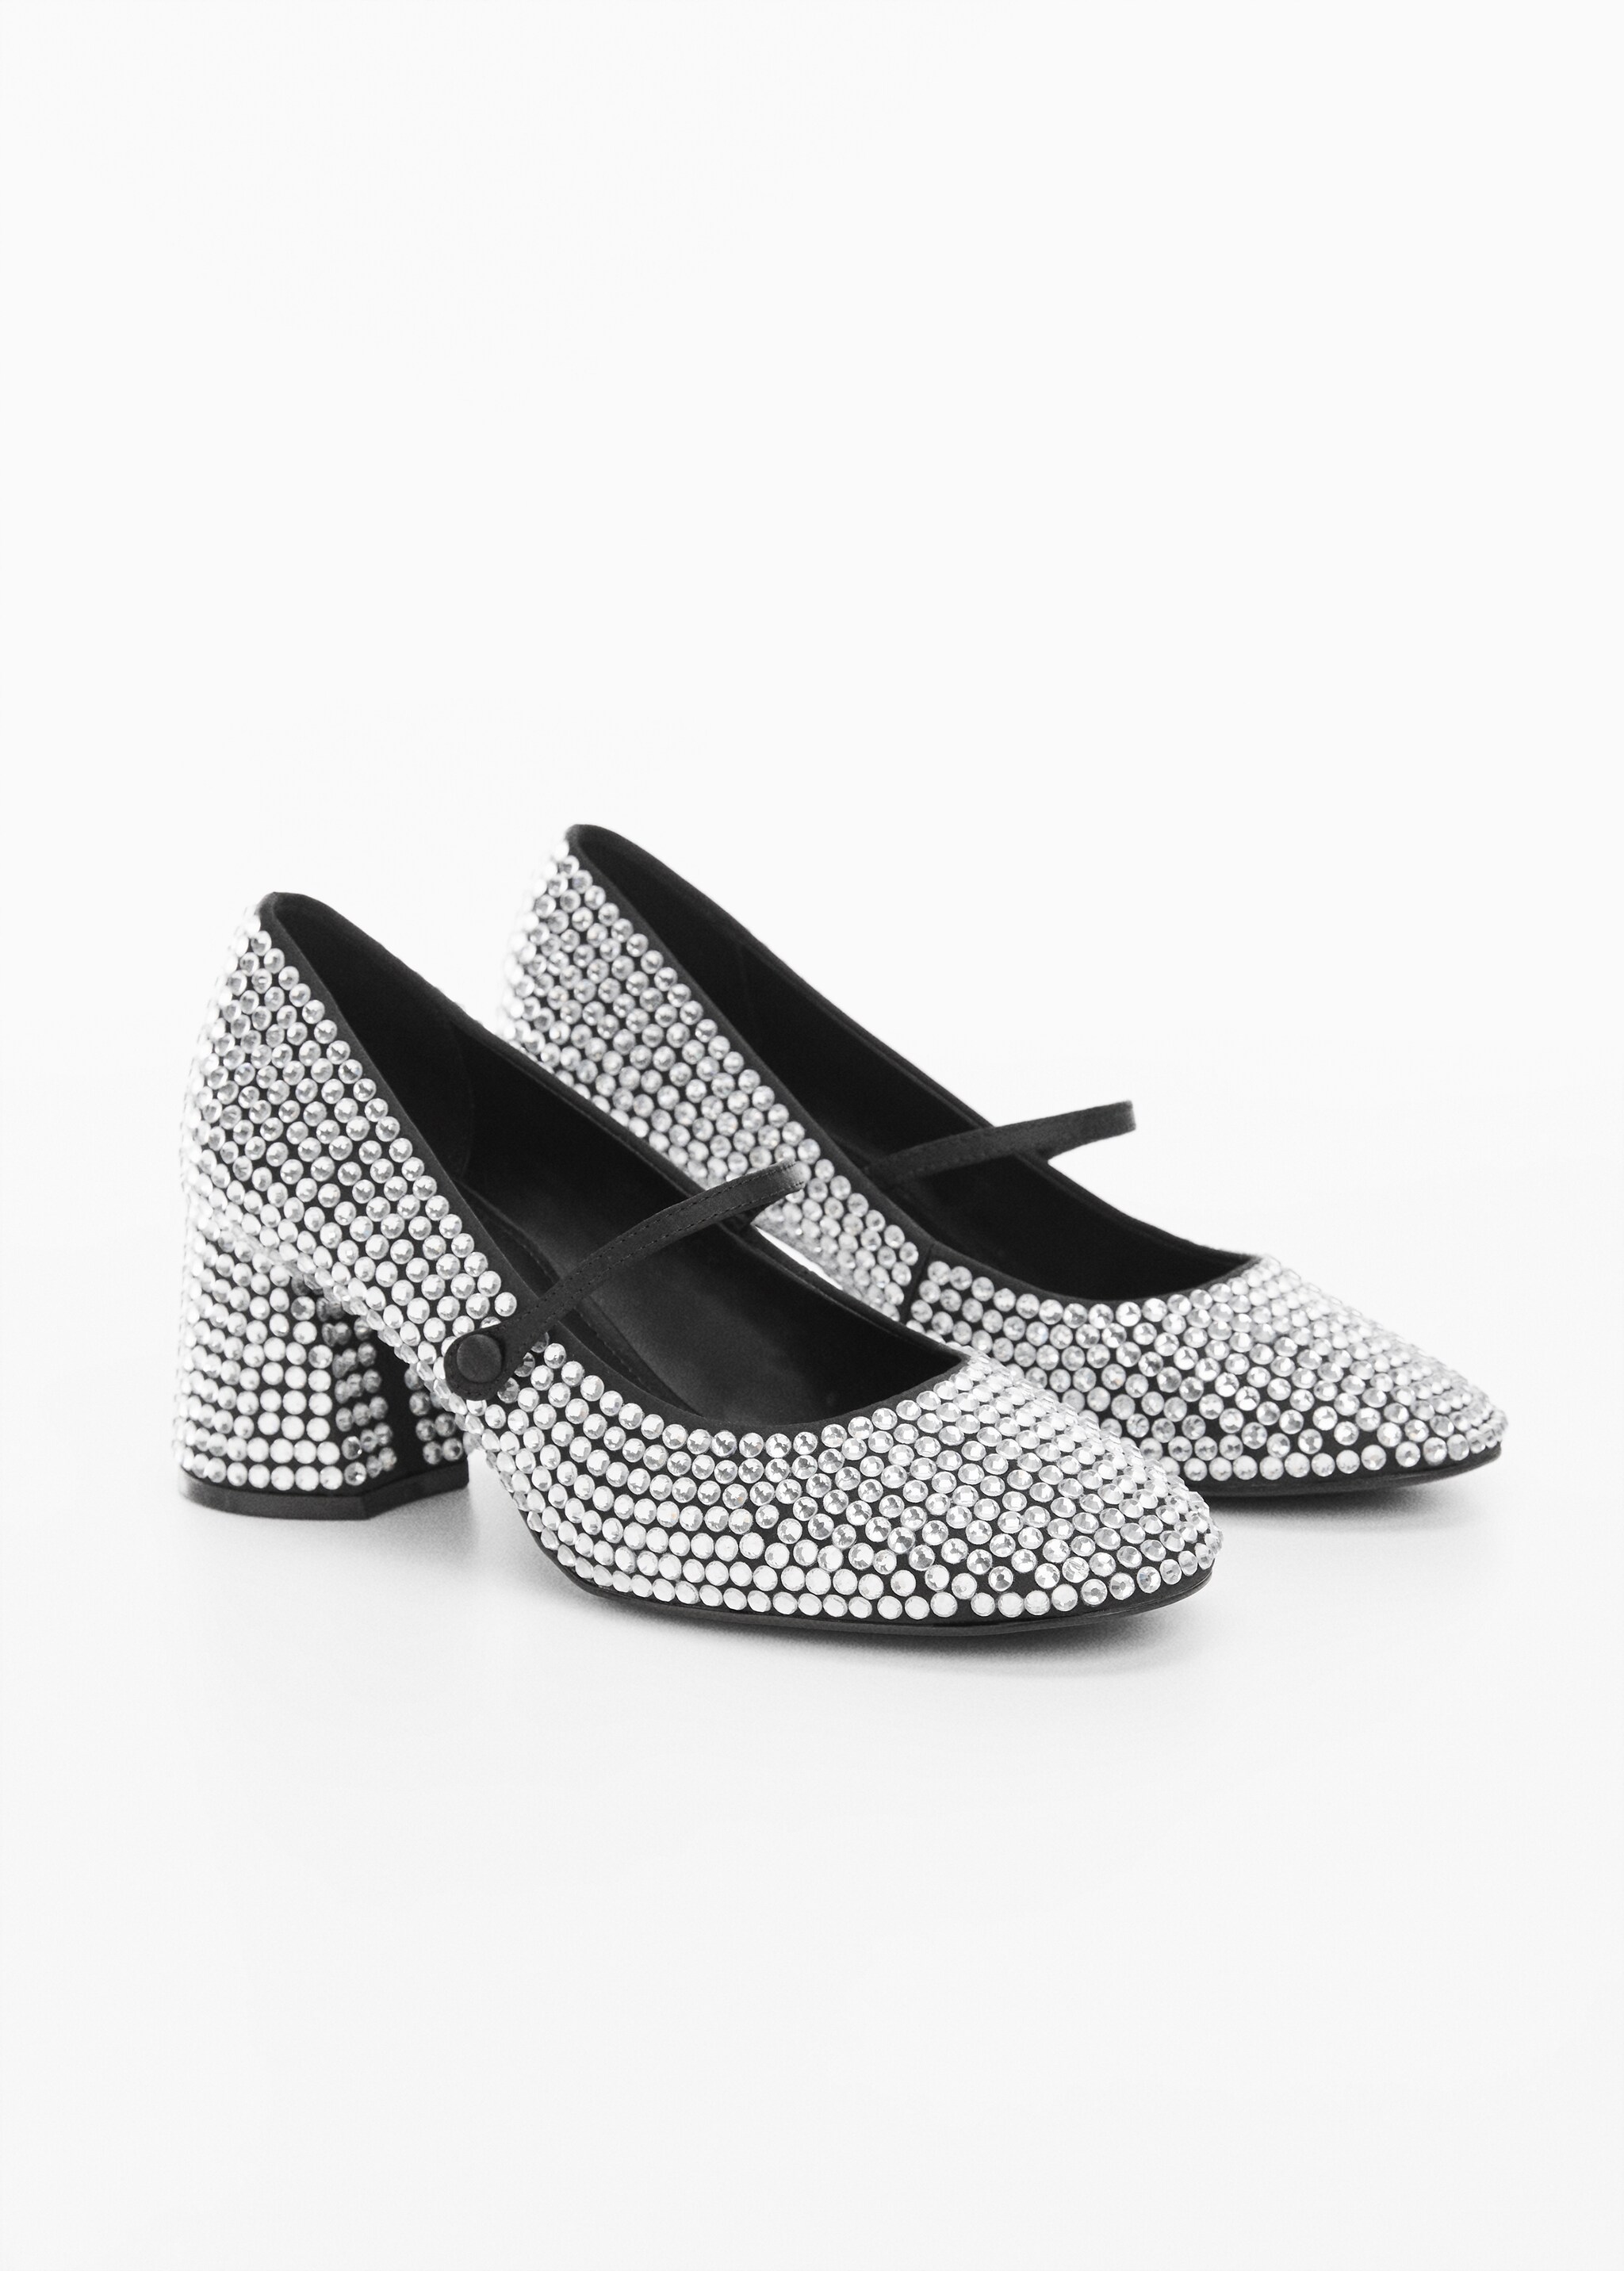 Shoes with shiny heels - Medium plane